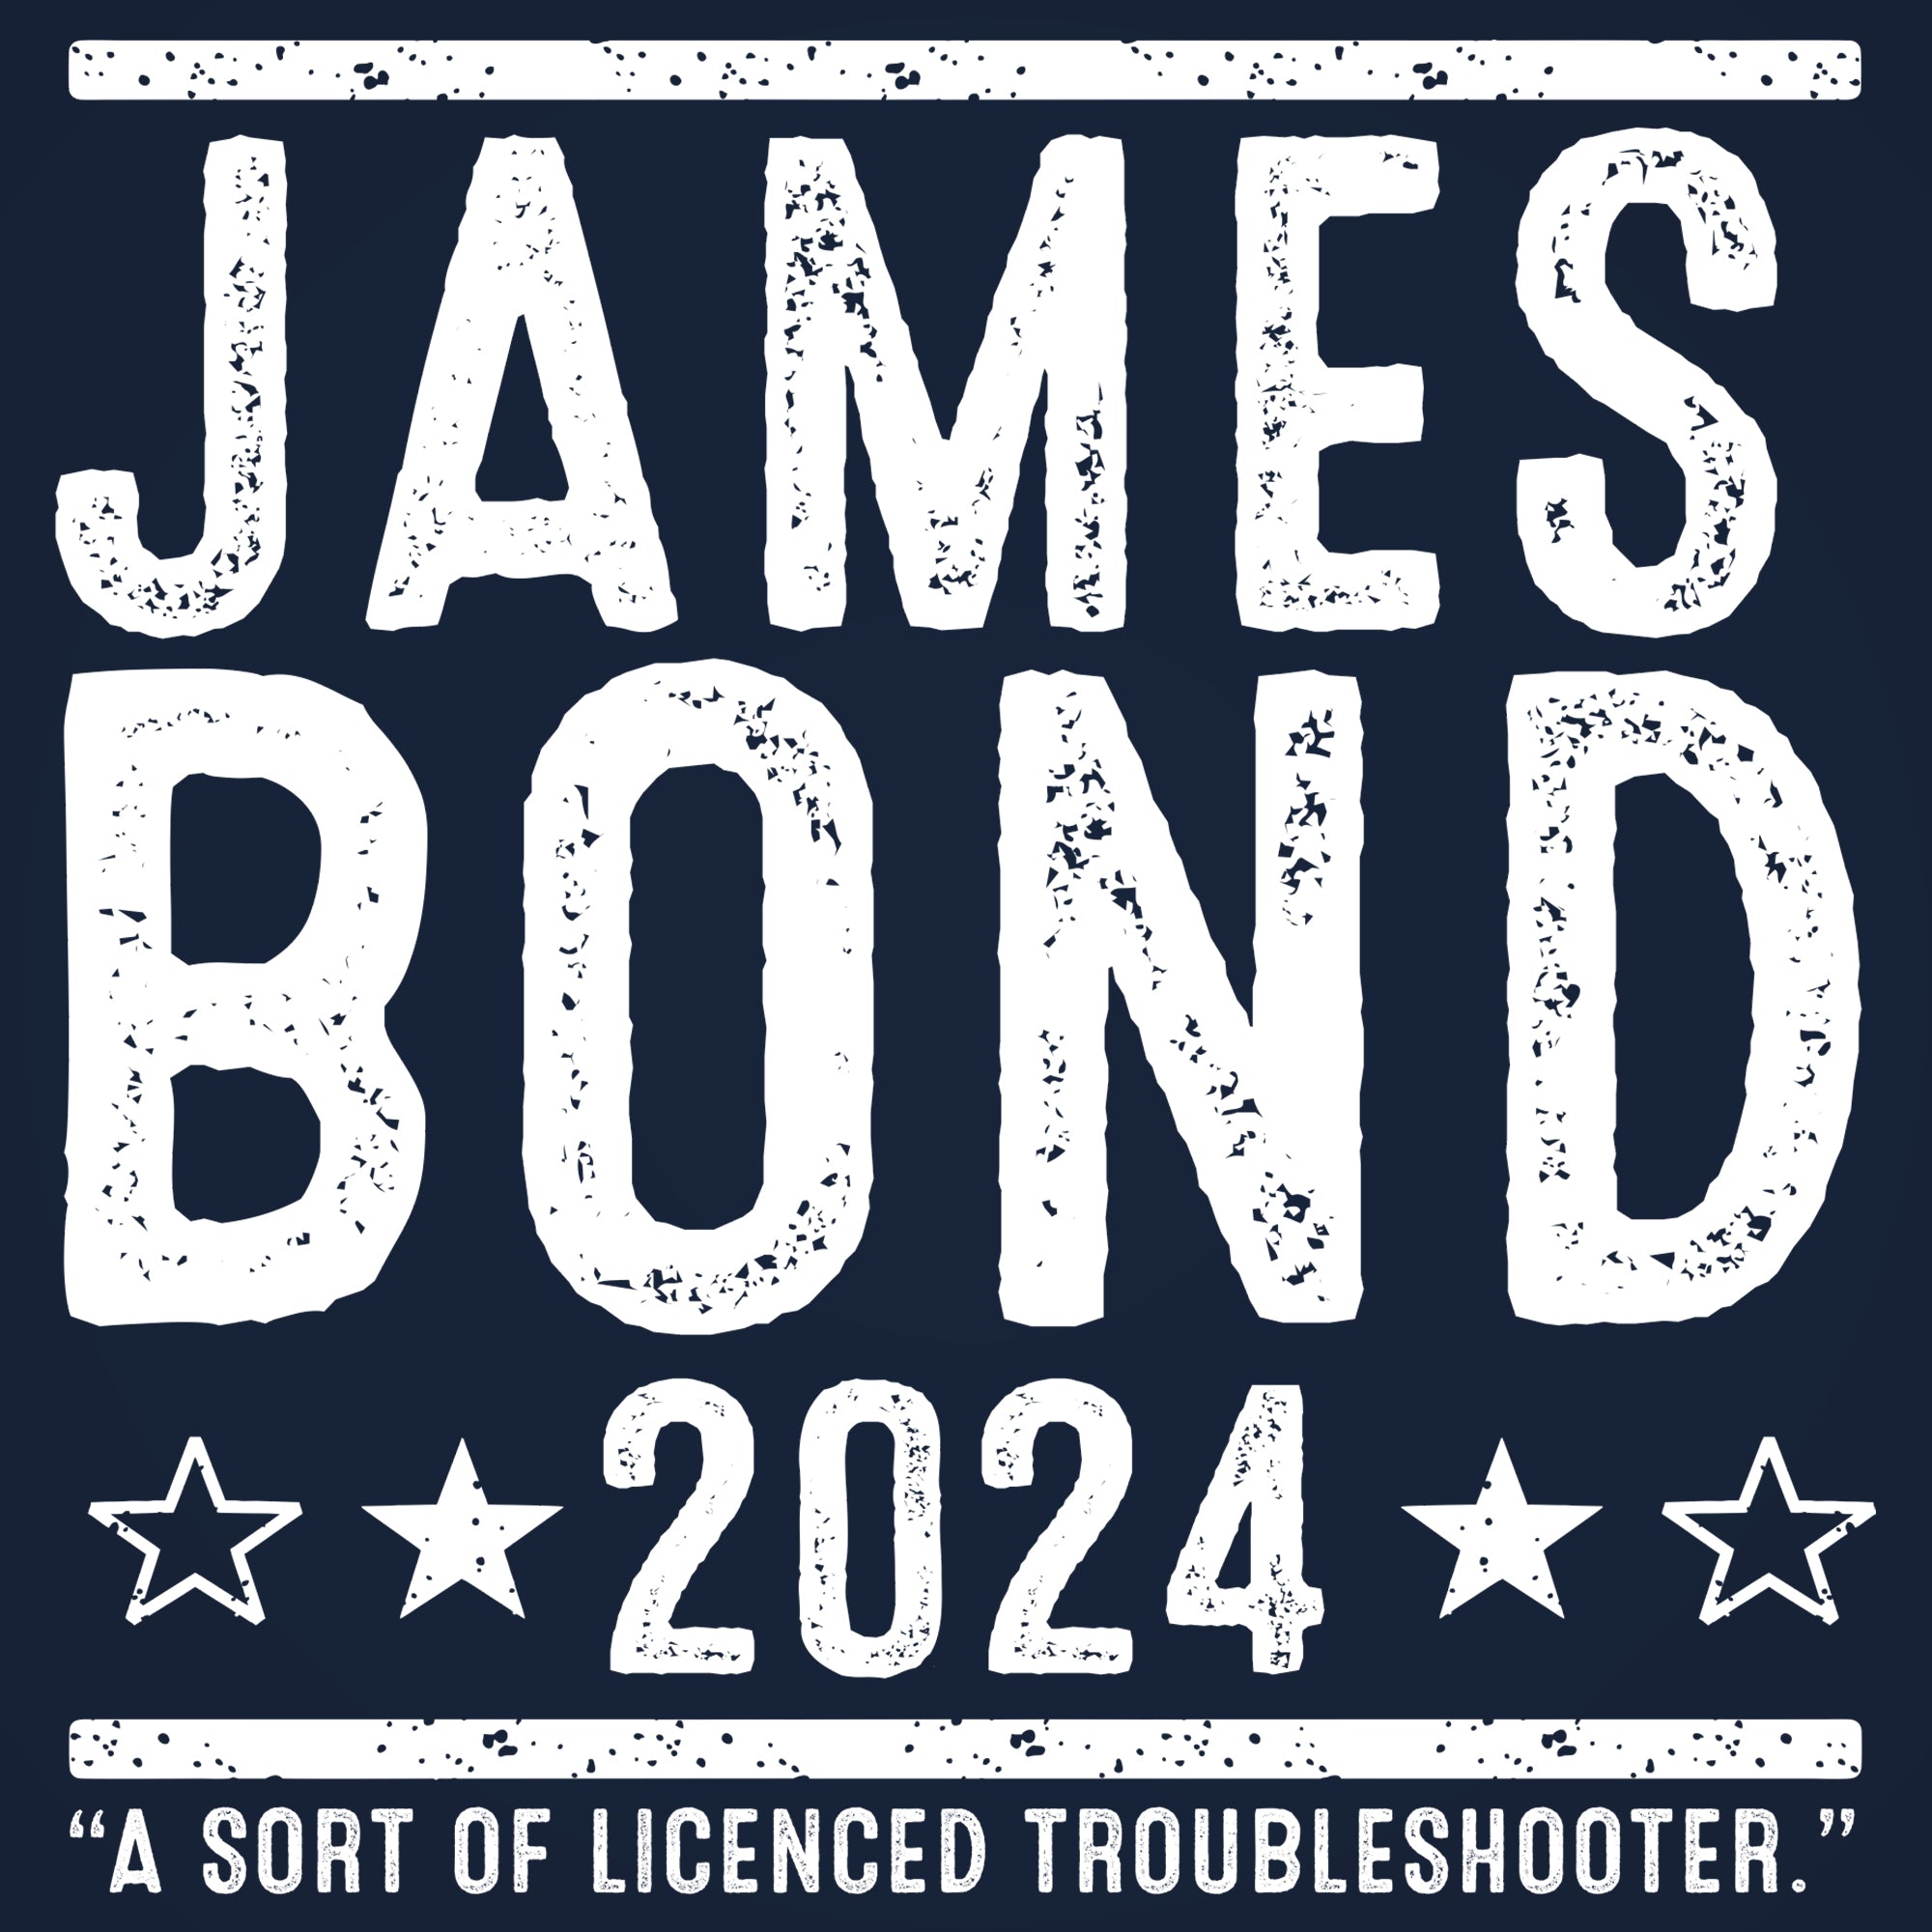 James Bond 2024 Election Tshirt - Donkey Tees